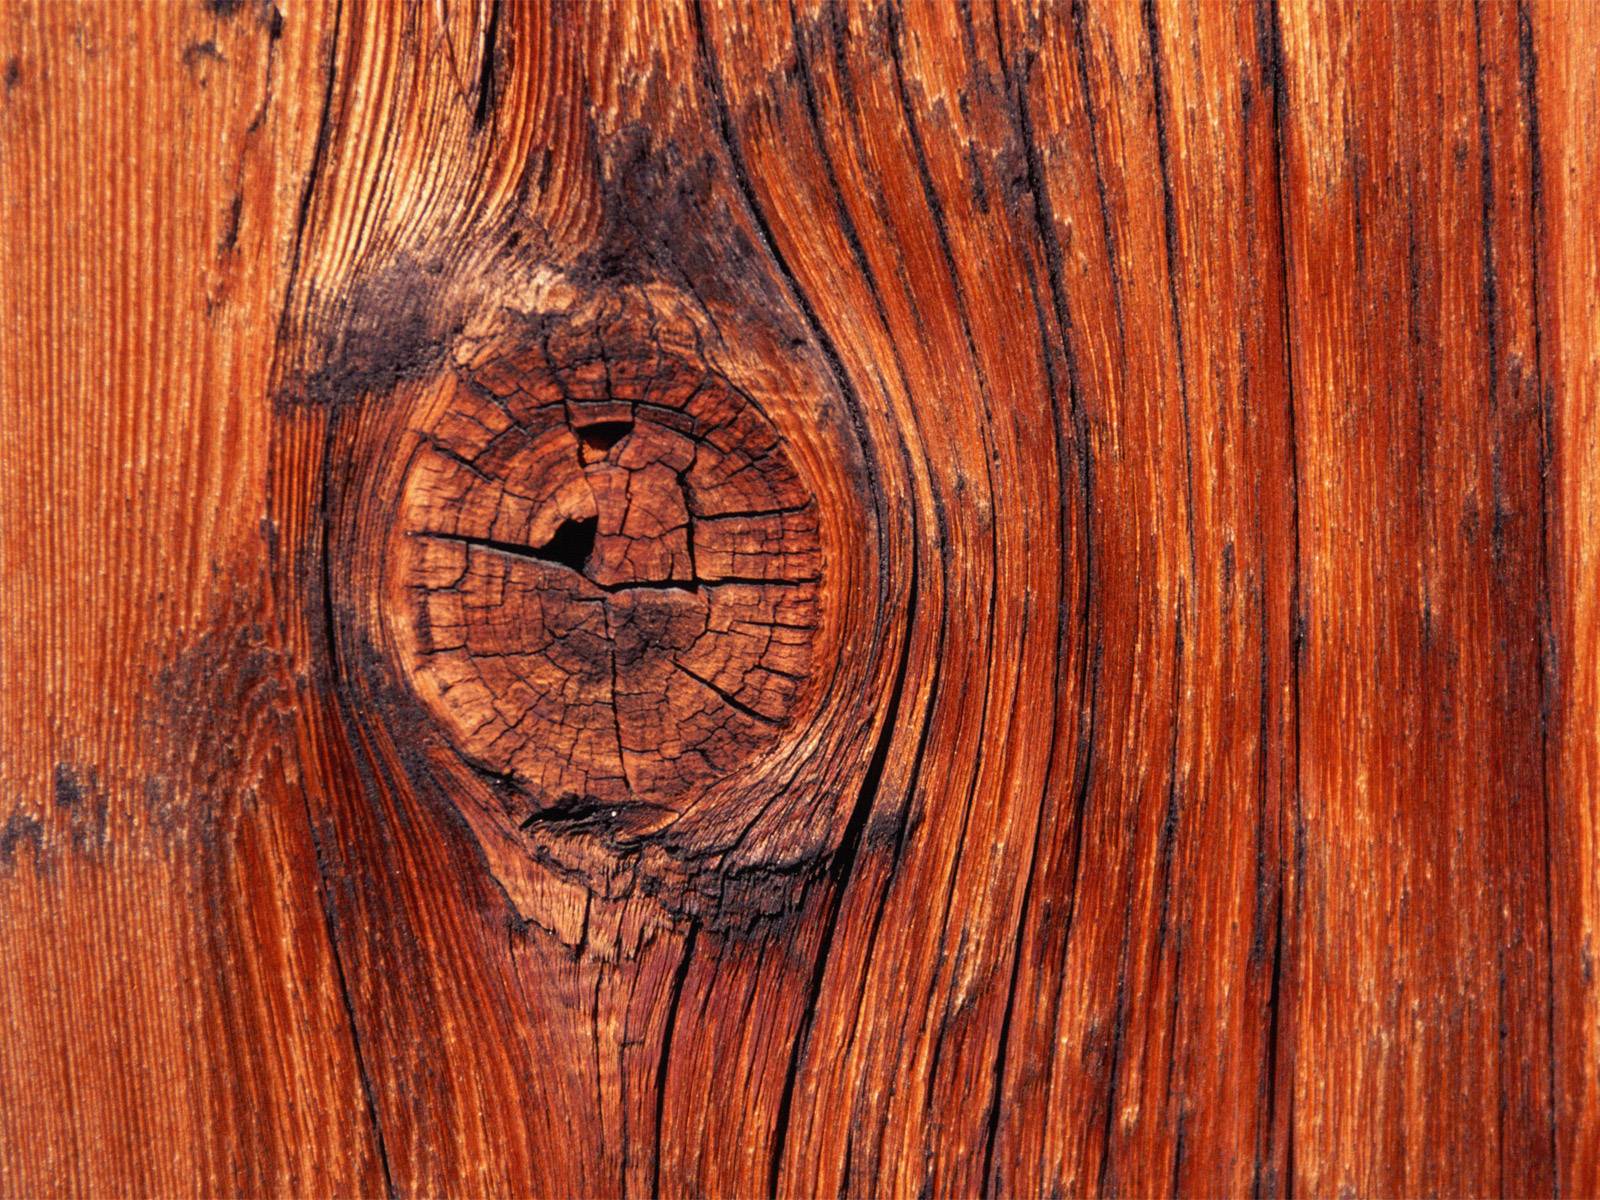 Vista Wallpapers – Textures » Vista Wallpaper Knot in the Wood